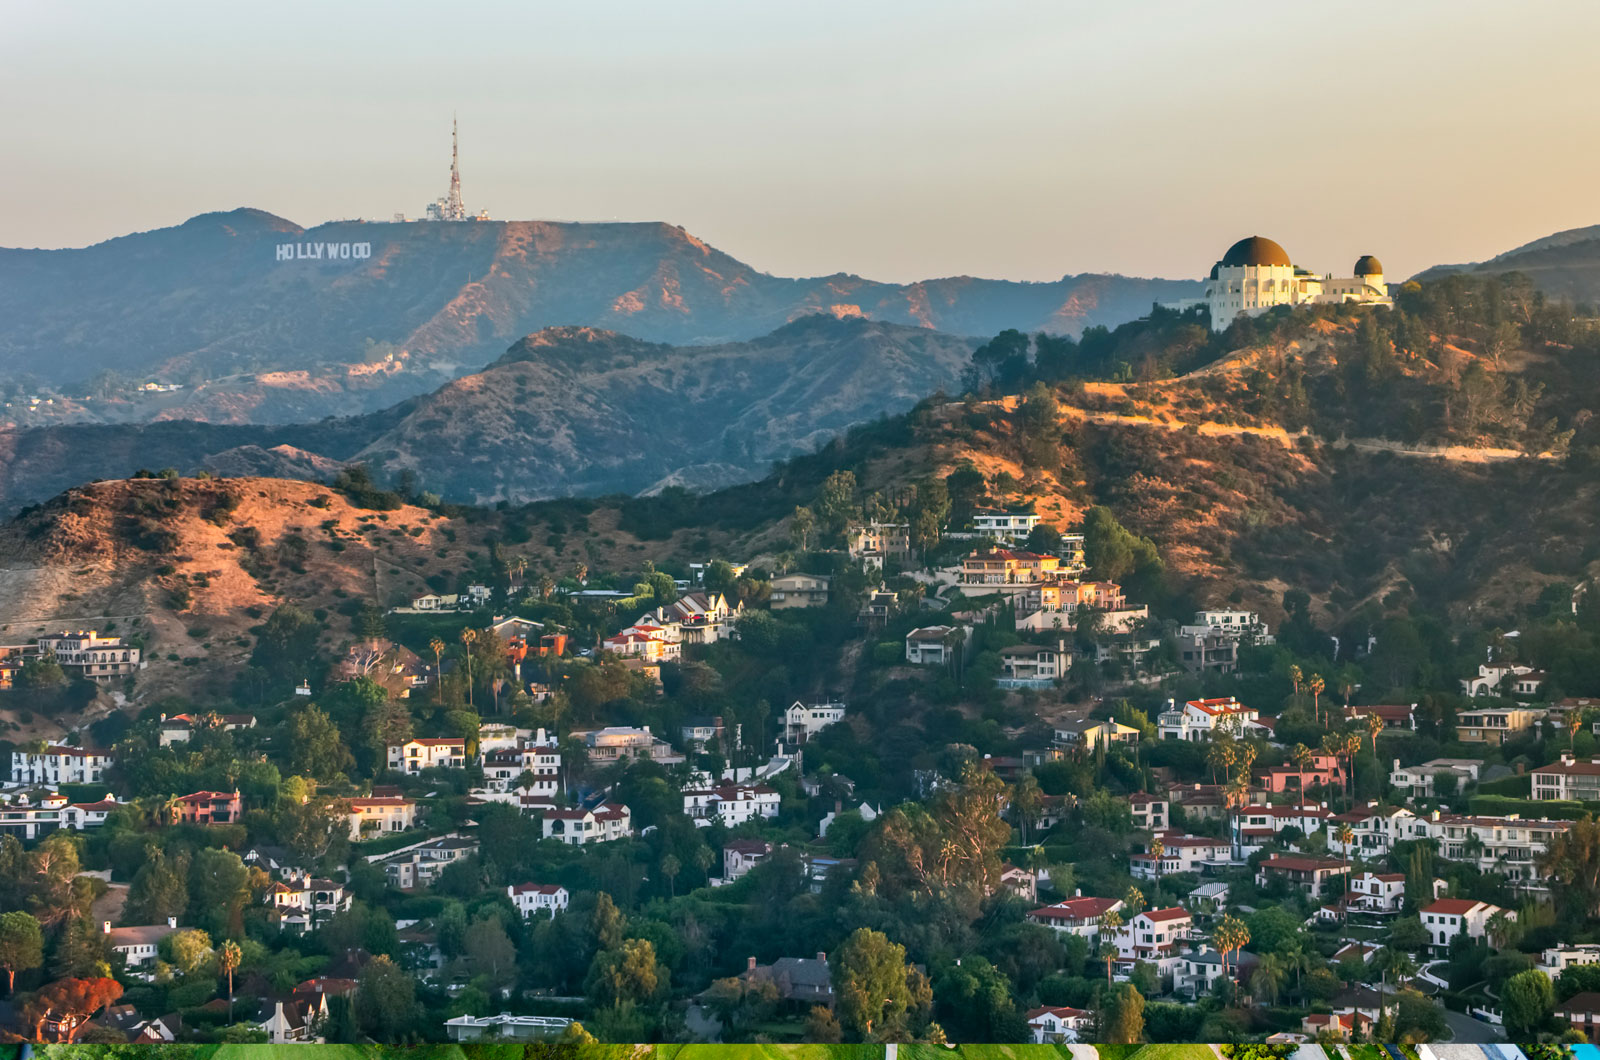 Hollywood Hills East